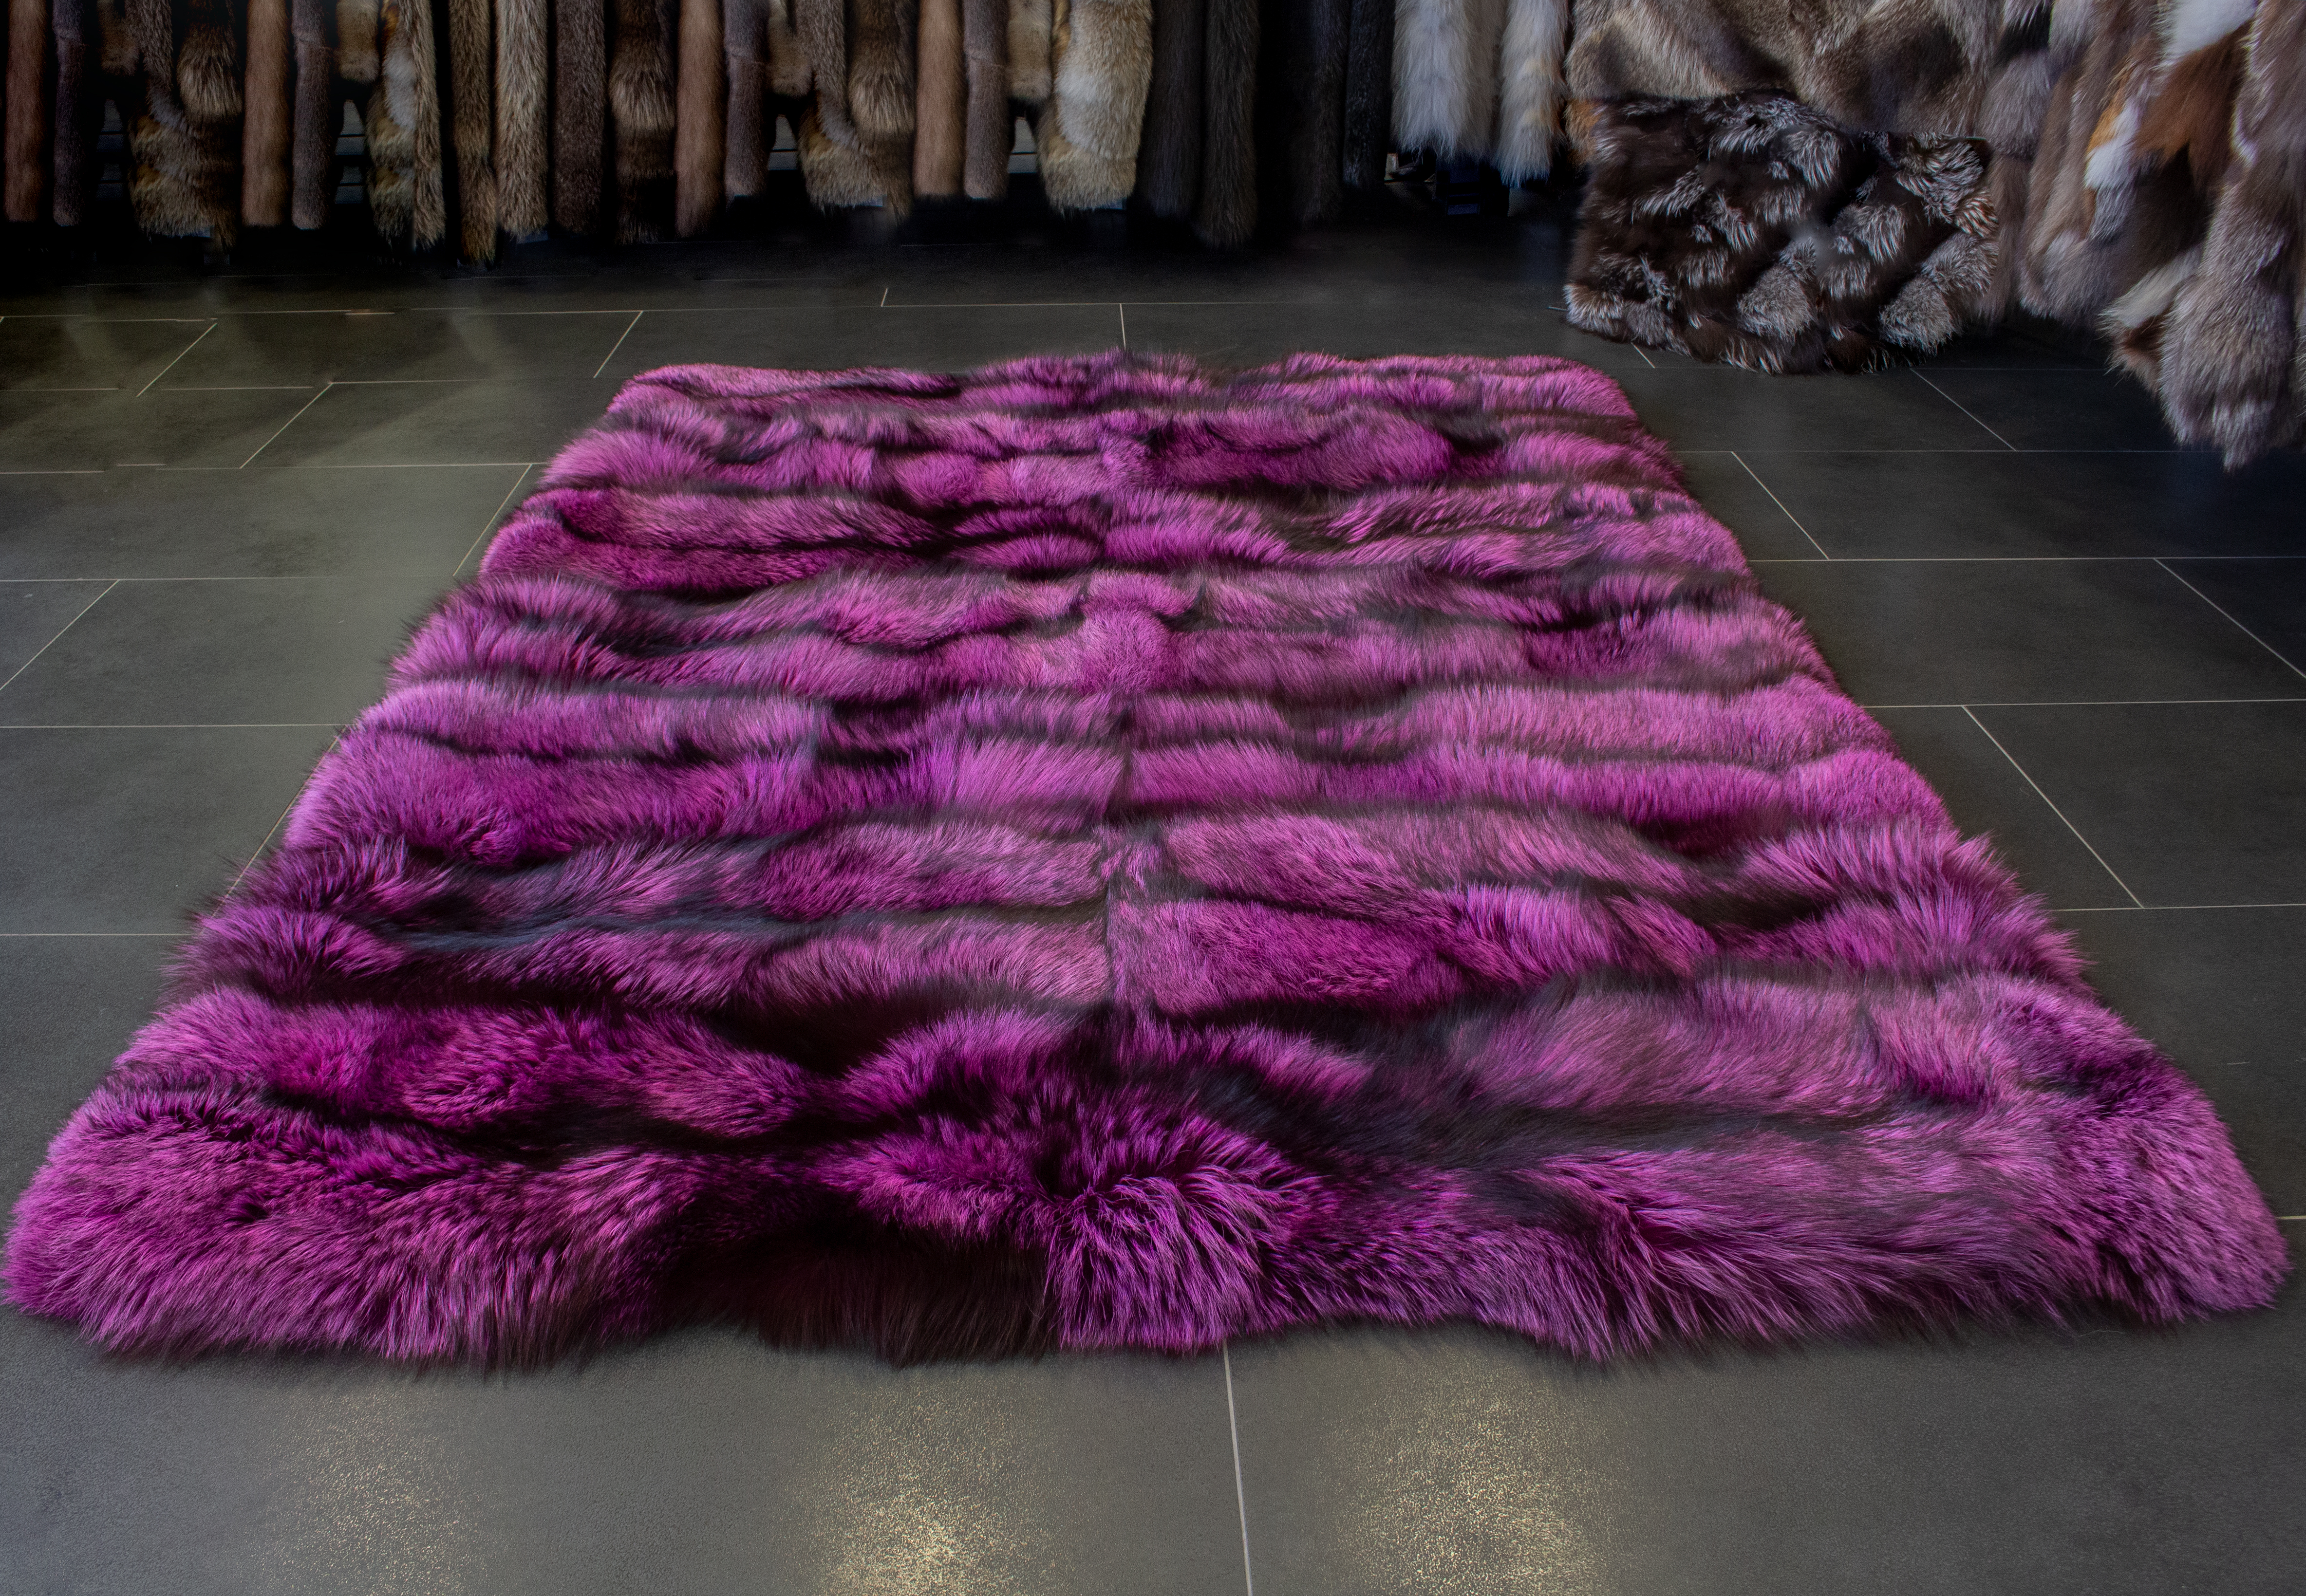 Silver Fox Fur Carpet in Purple